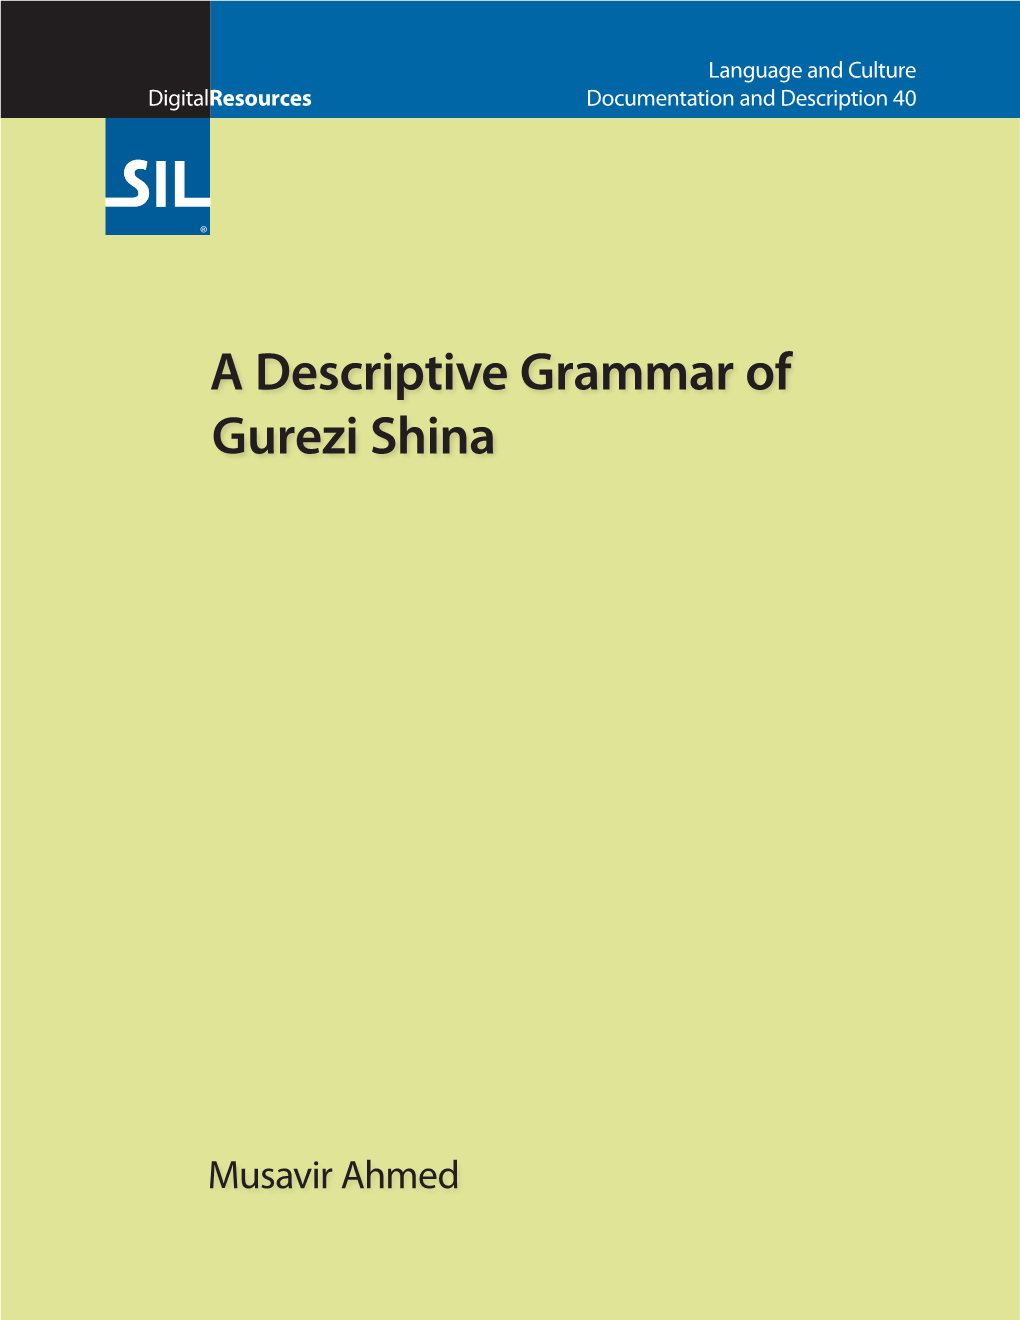 A Descriptive Grammar of Gurezi Shina